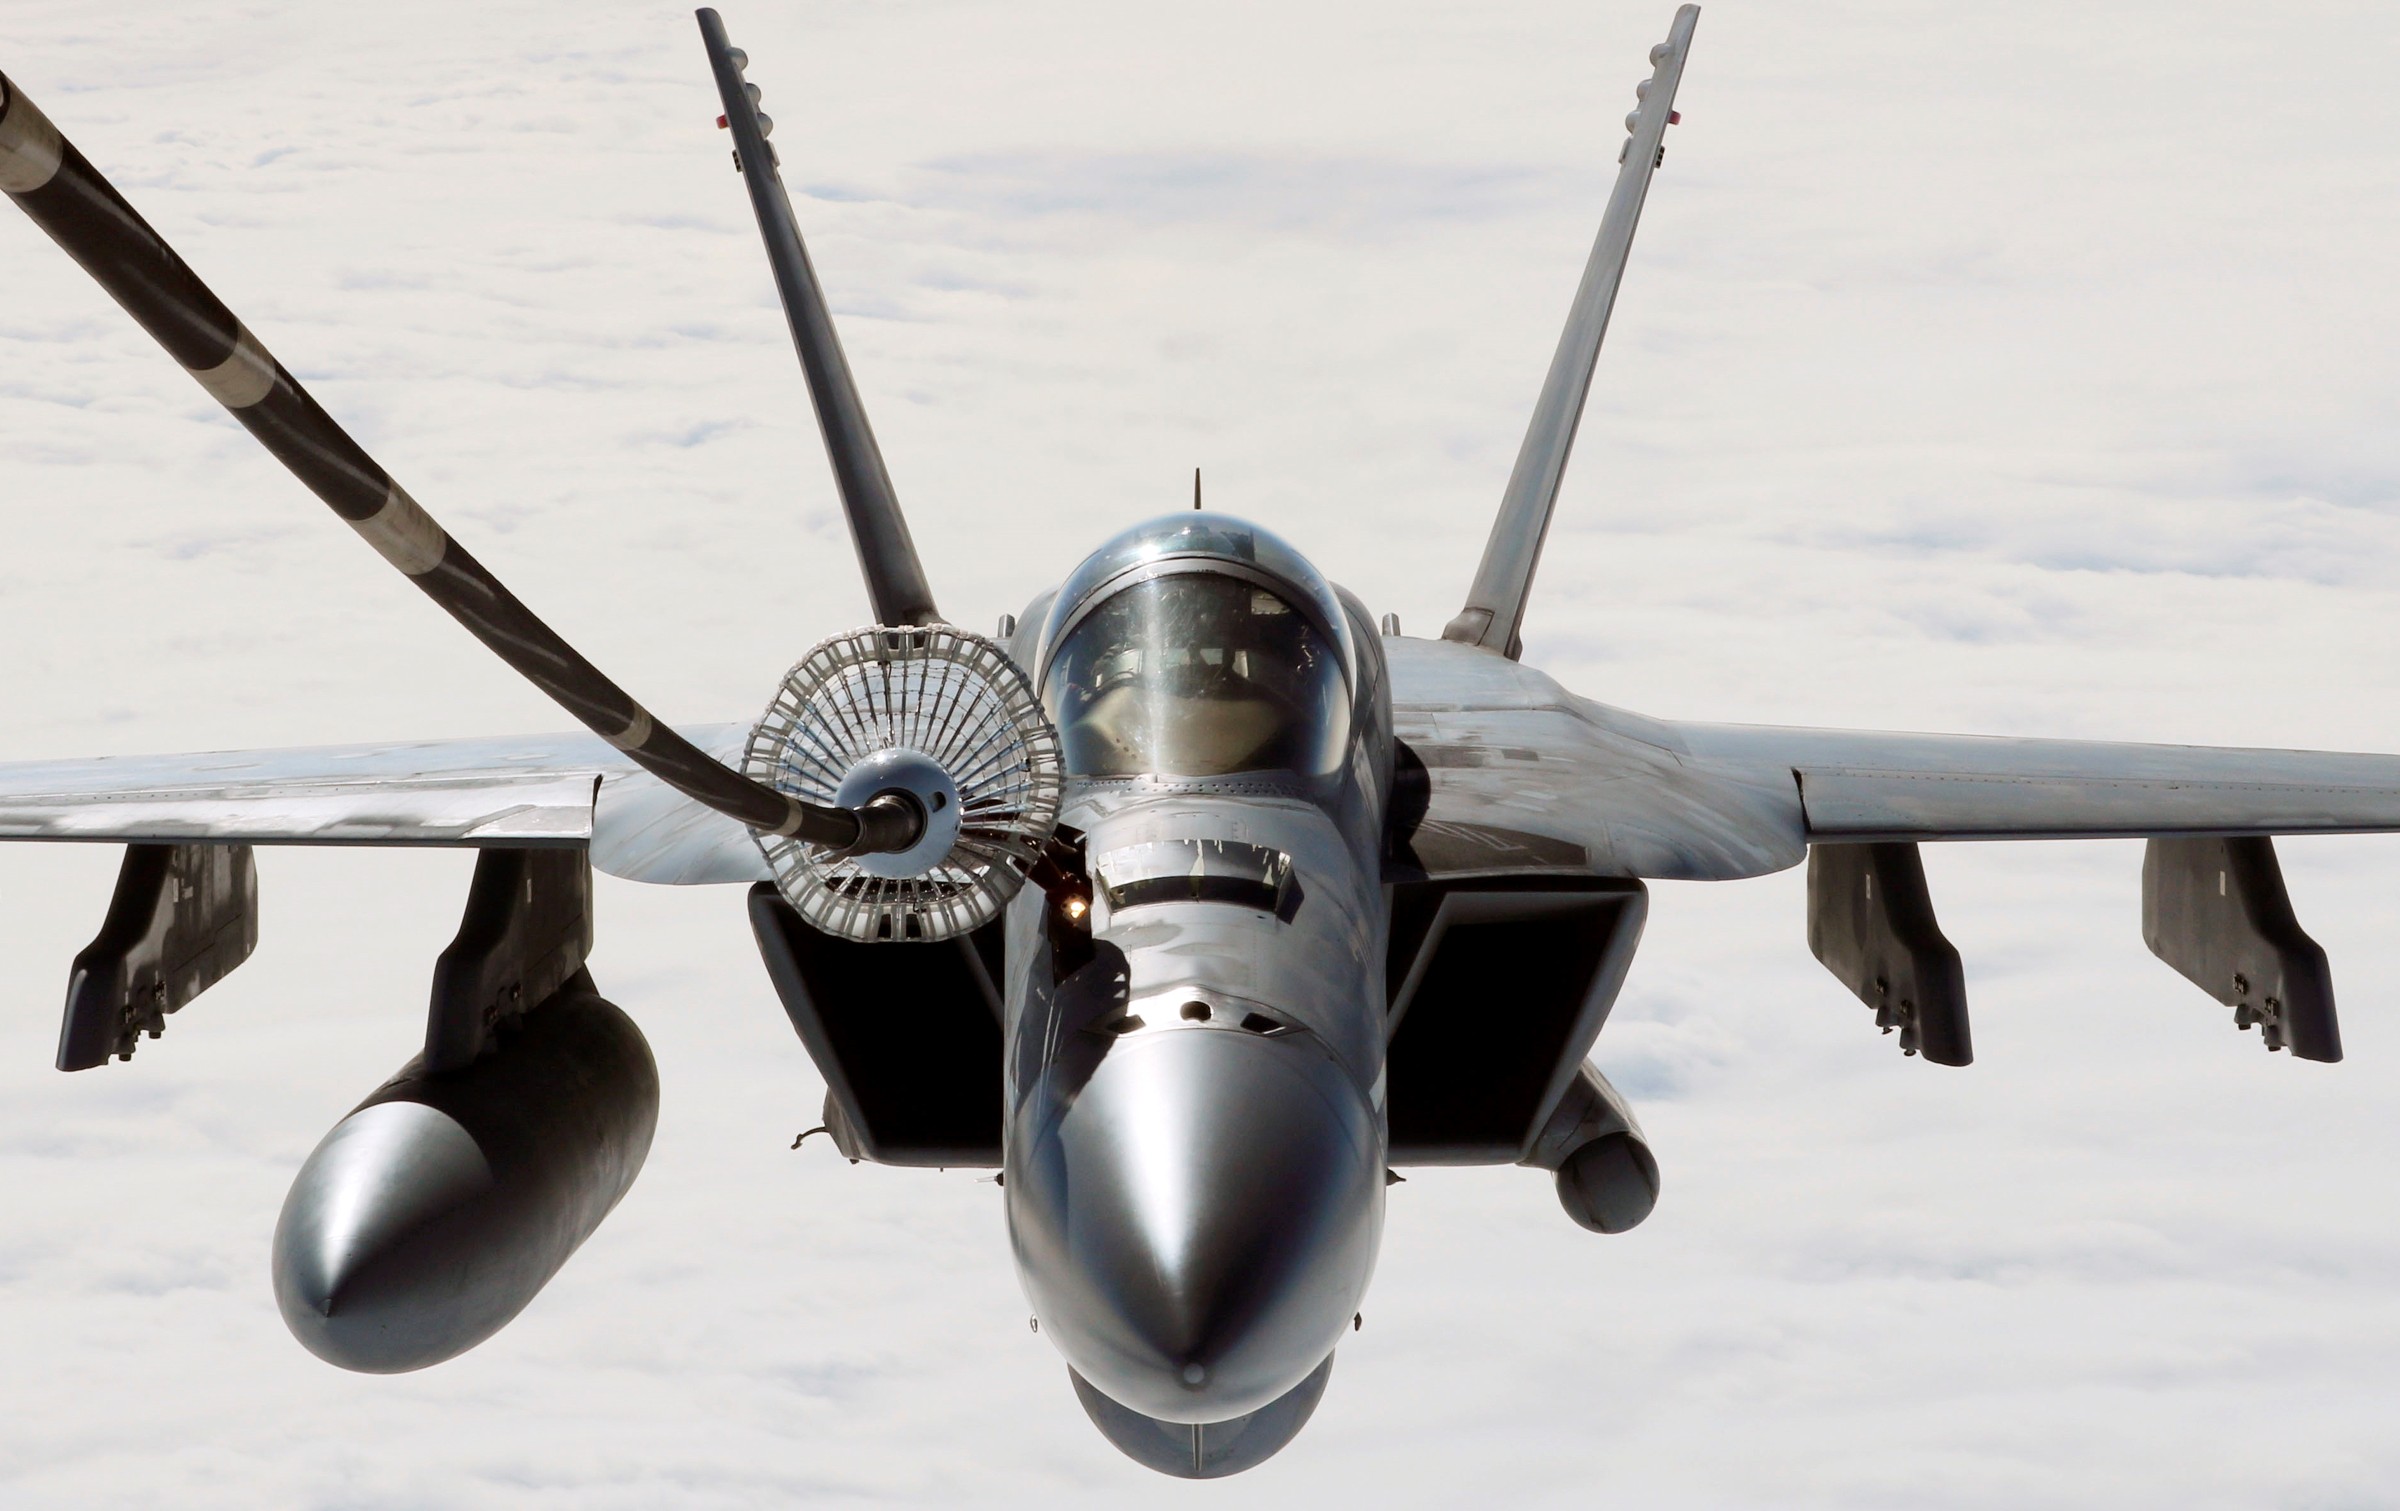 vfa-115 eagles strike fighter squadron f/a-18e super hornet cvw-5 uss ronald reagan cvn-76 2017 03